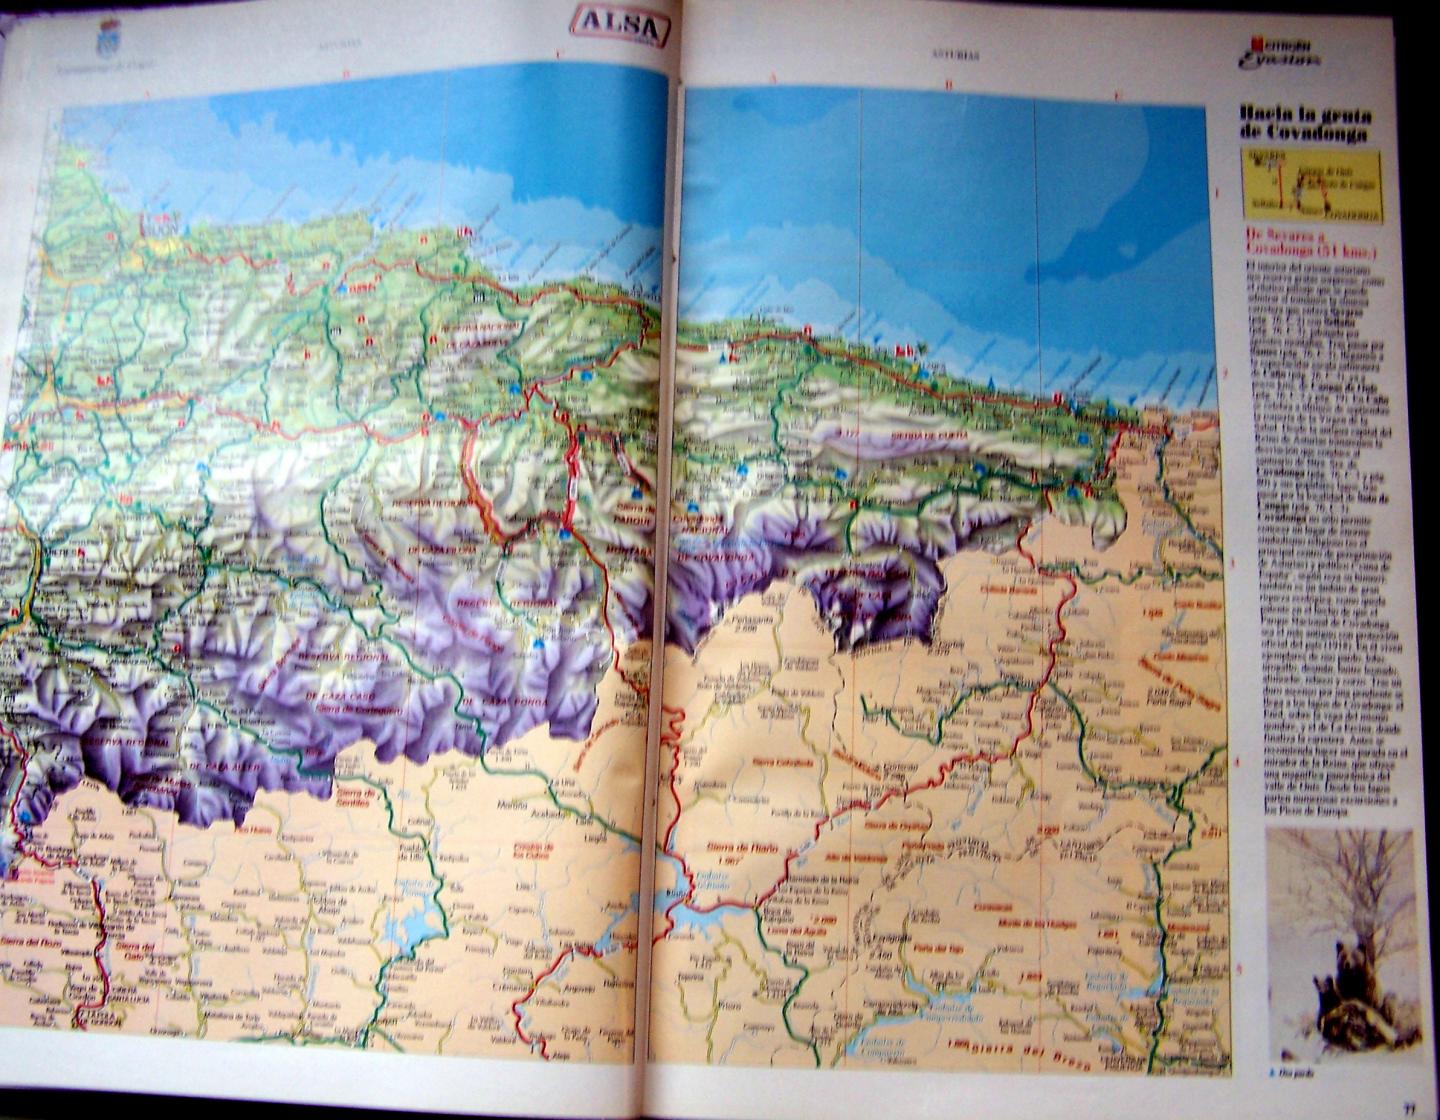 Nason, Maria Luis. e.a. - Gran atlas turistico de Espanan Y Portugal.